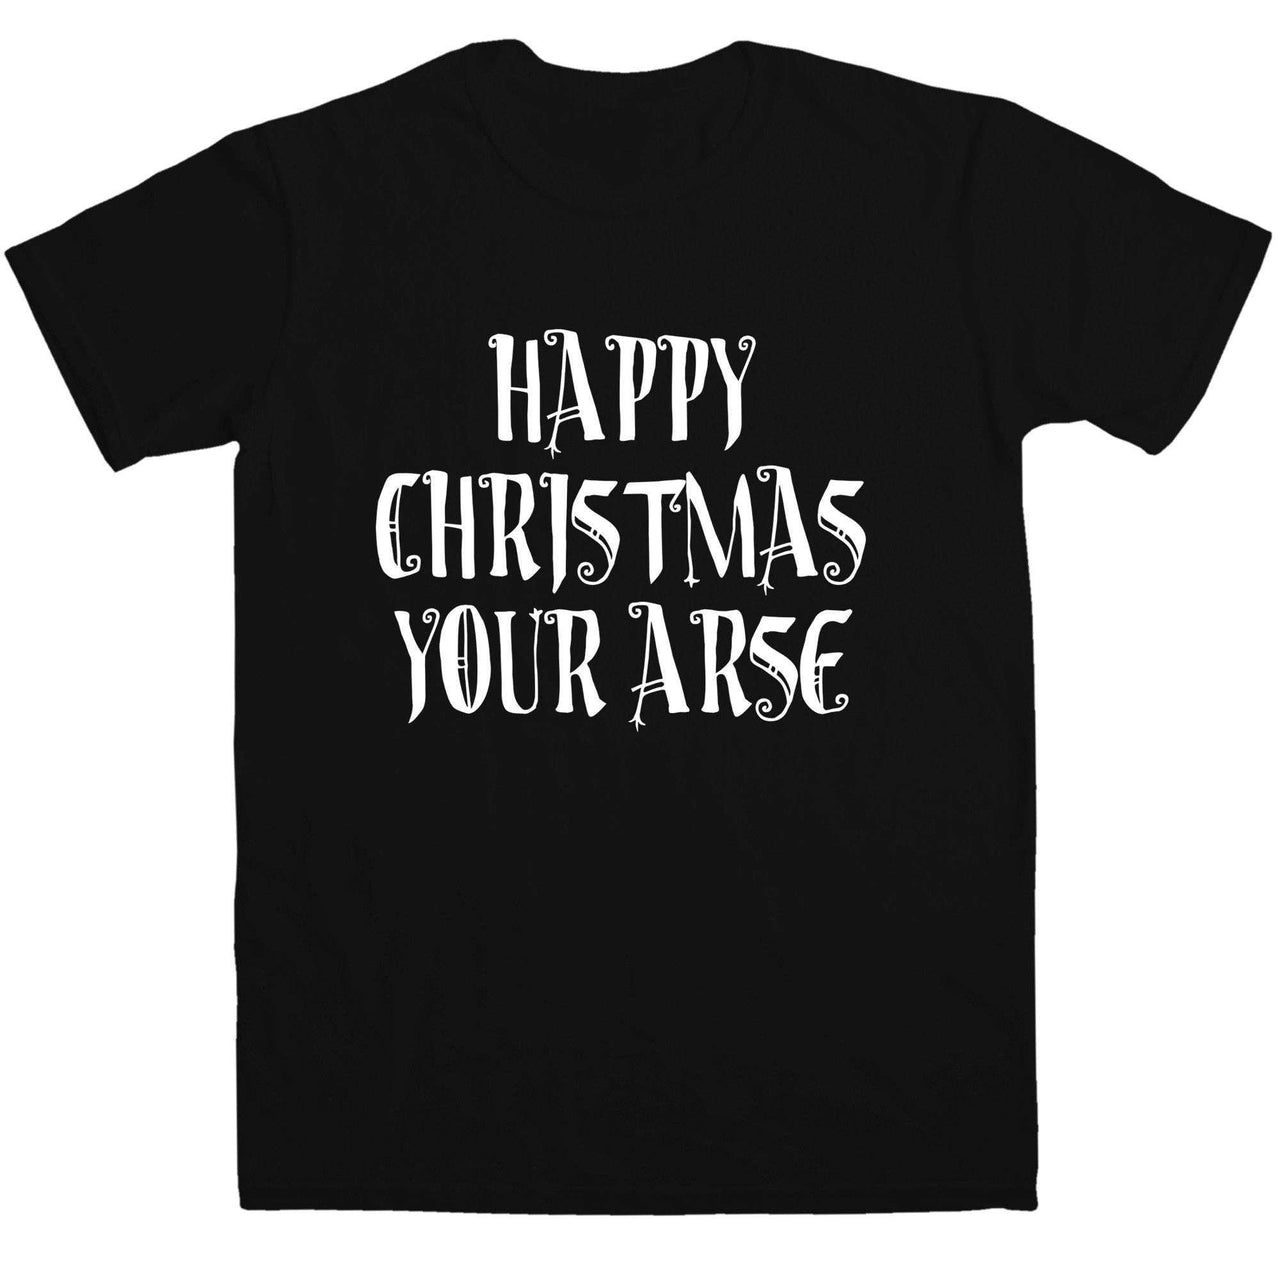 Mens Funny Christmas Happy Christmas Your Ar*e Graphic T-Shirt For Men 8Ball